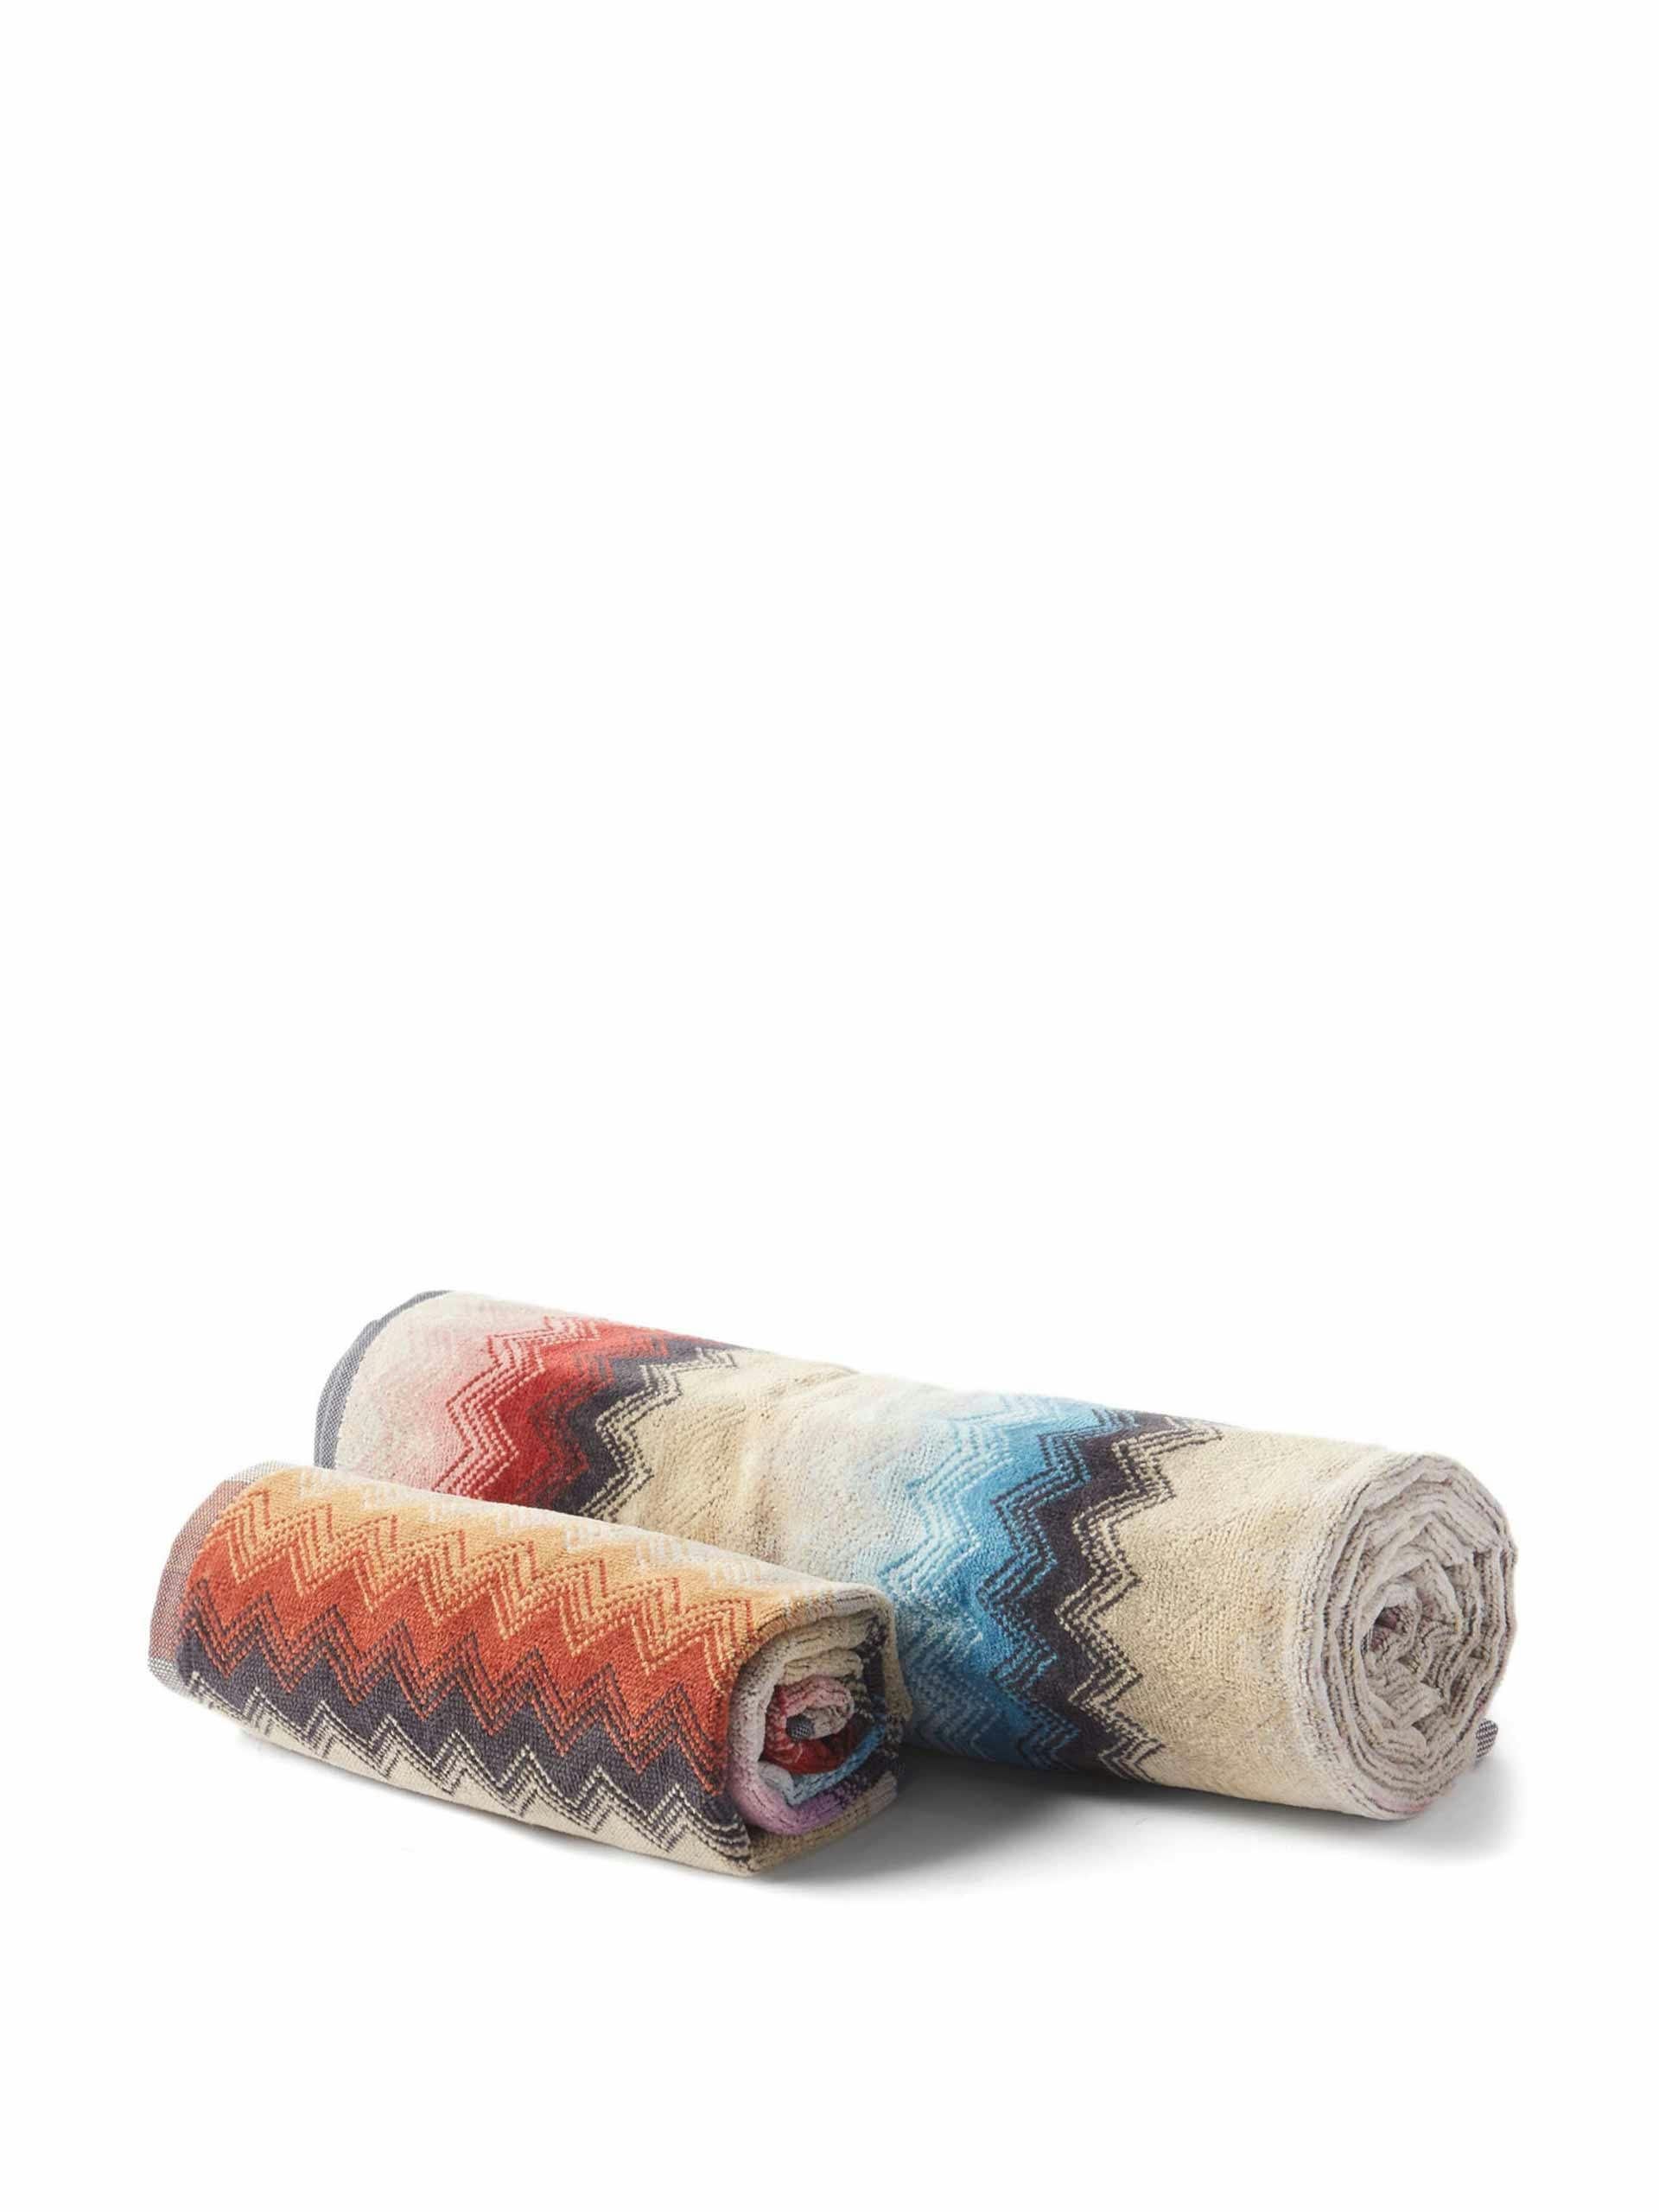 Multicoloured chevron cotton towels - set of two